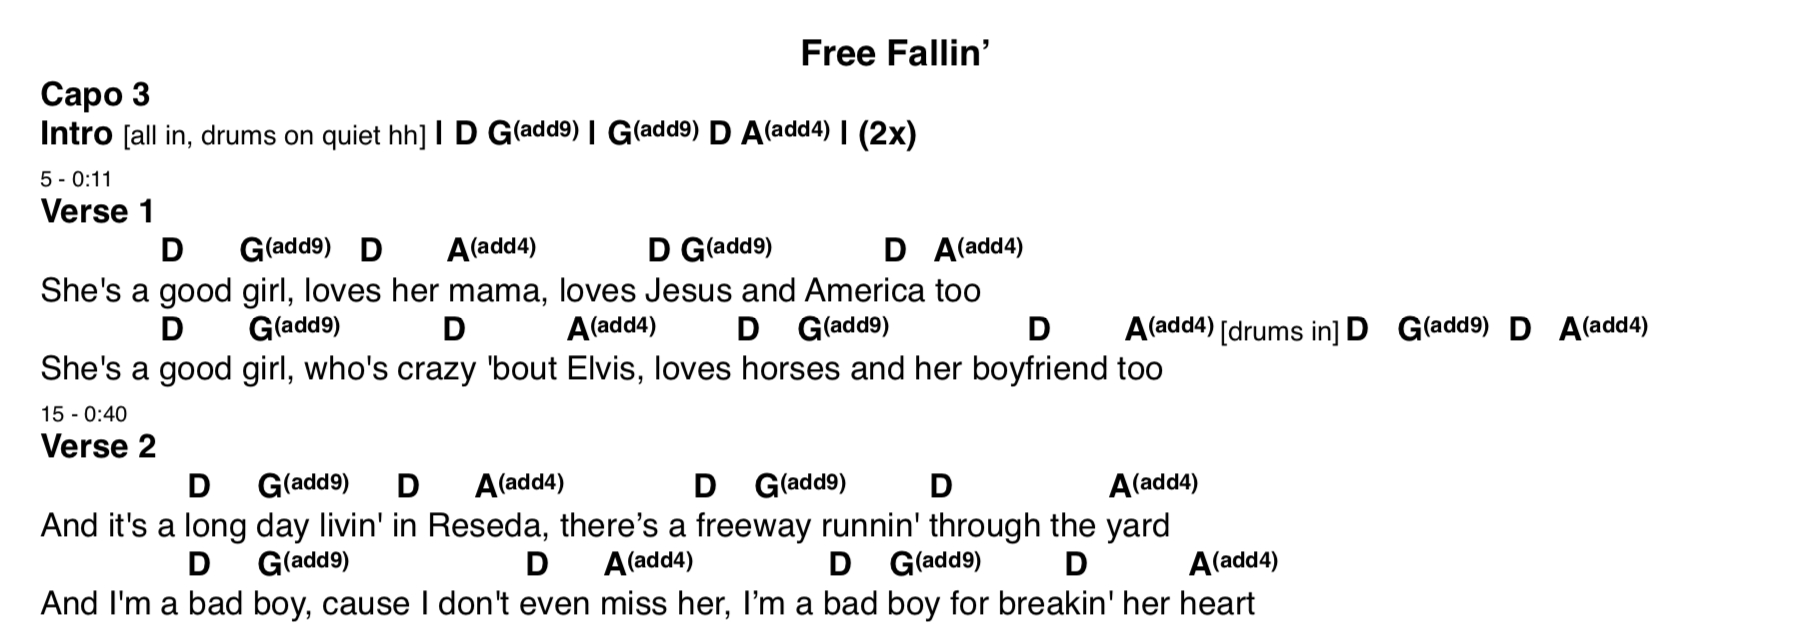 Free Fallin Chords Free Fallin Chord Sheet Capo 3